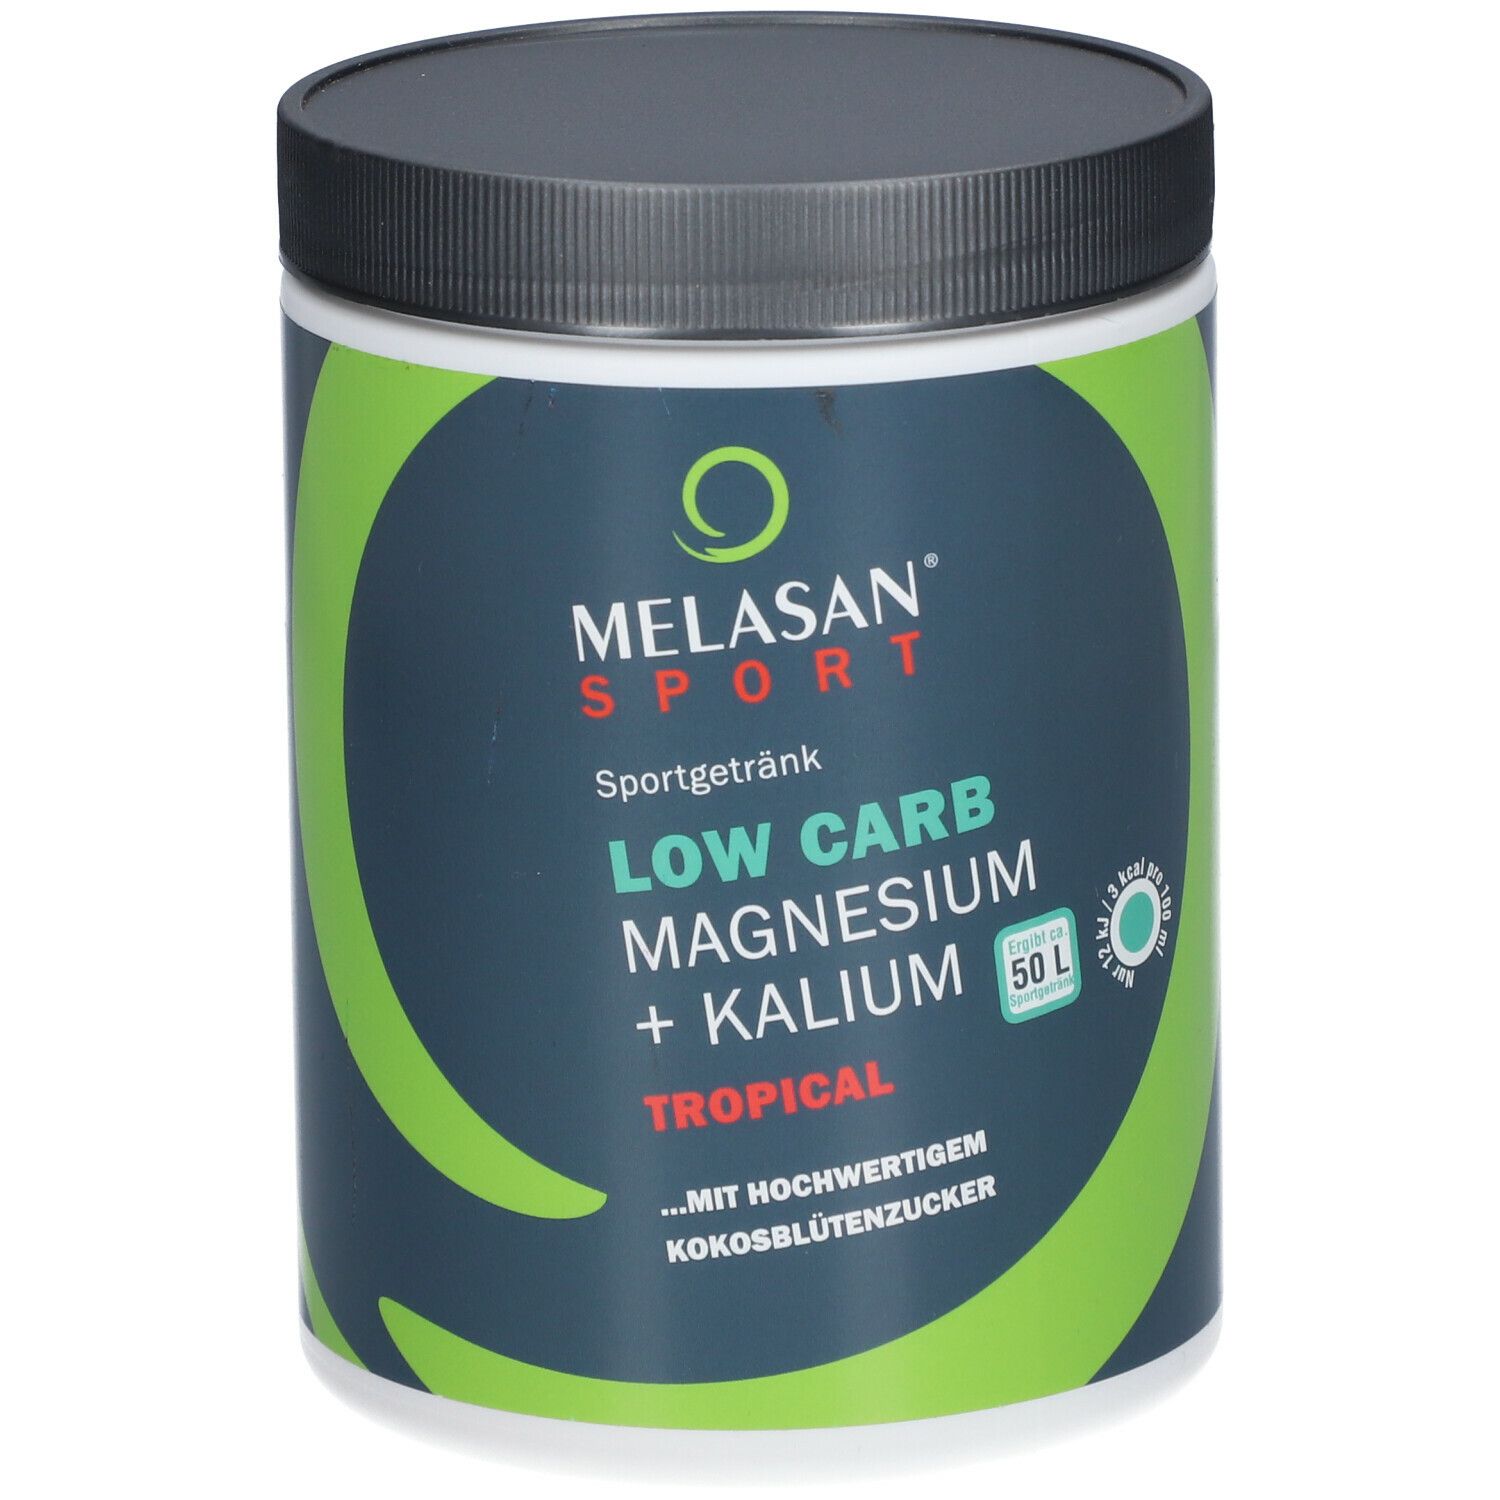 MELASAN® SPORT Magnesium + Kalium Tropical